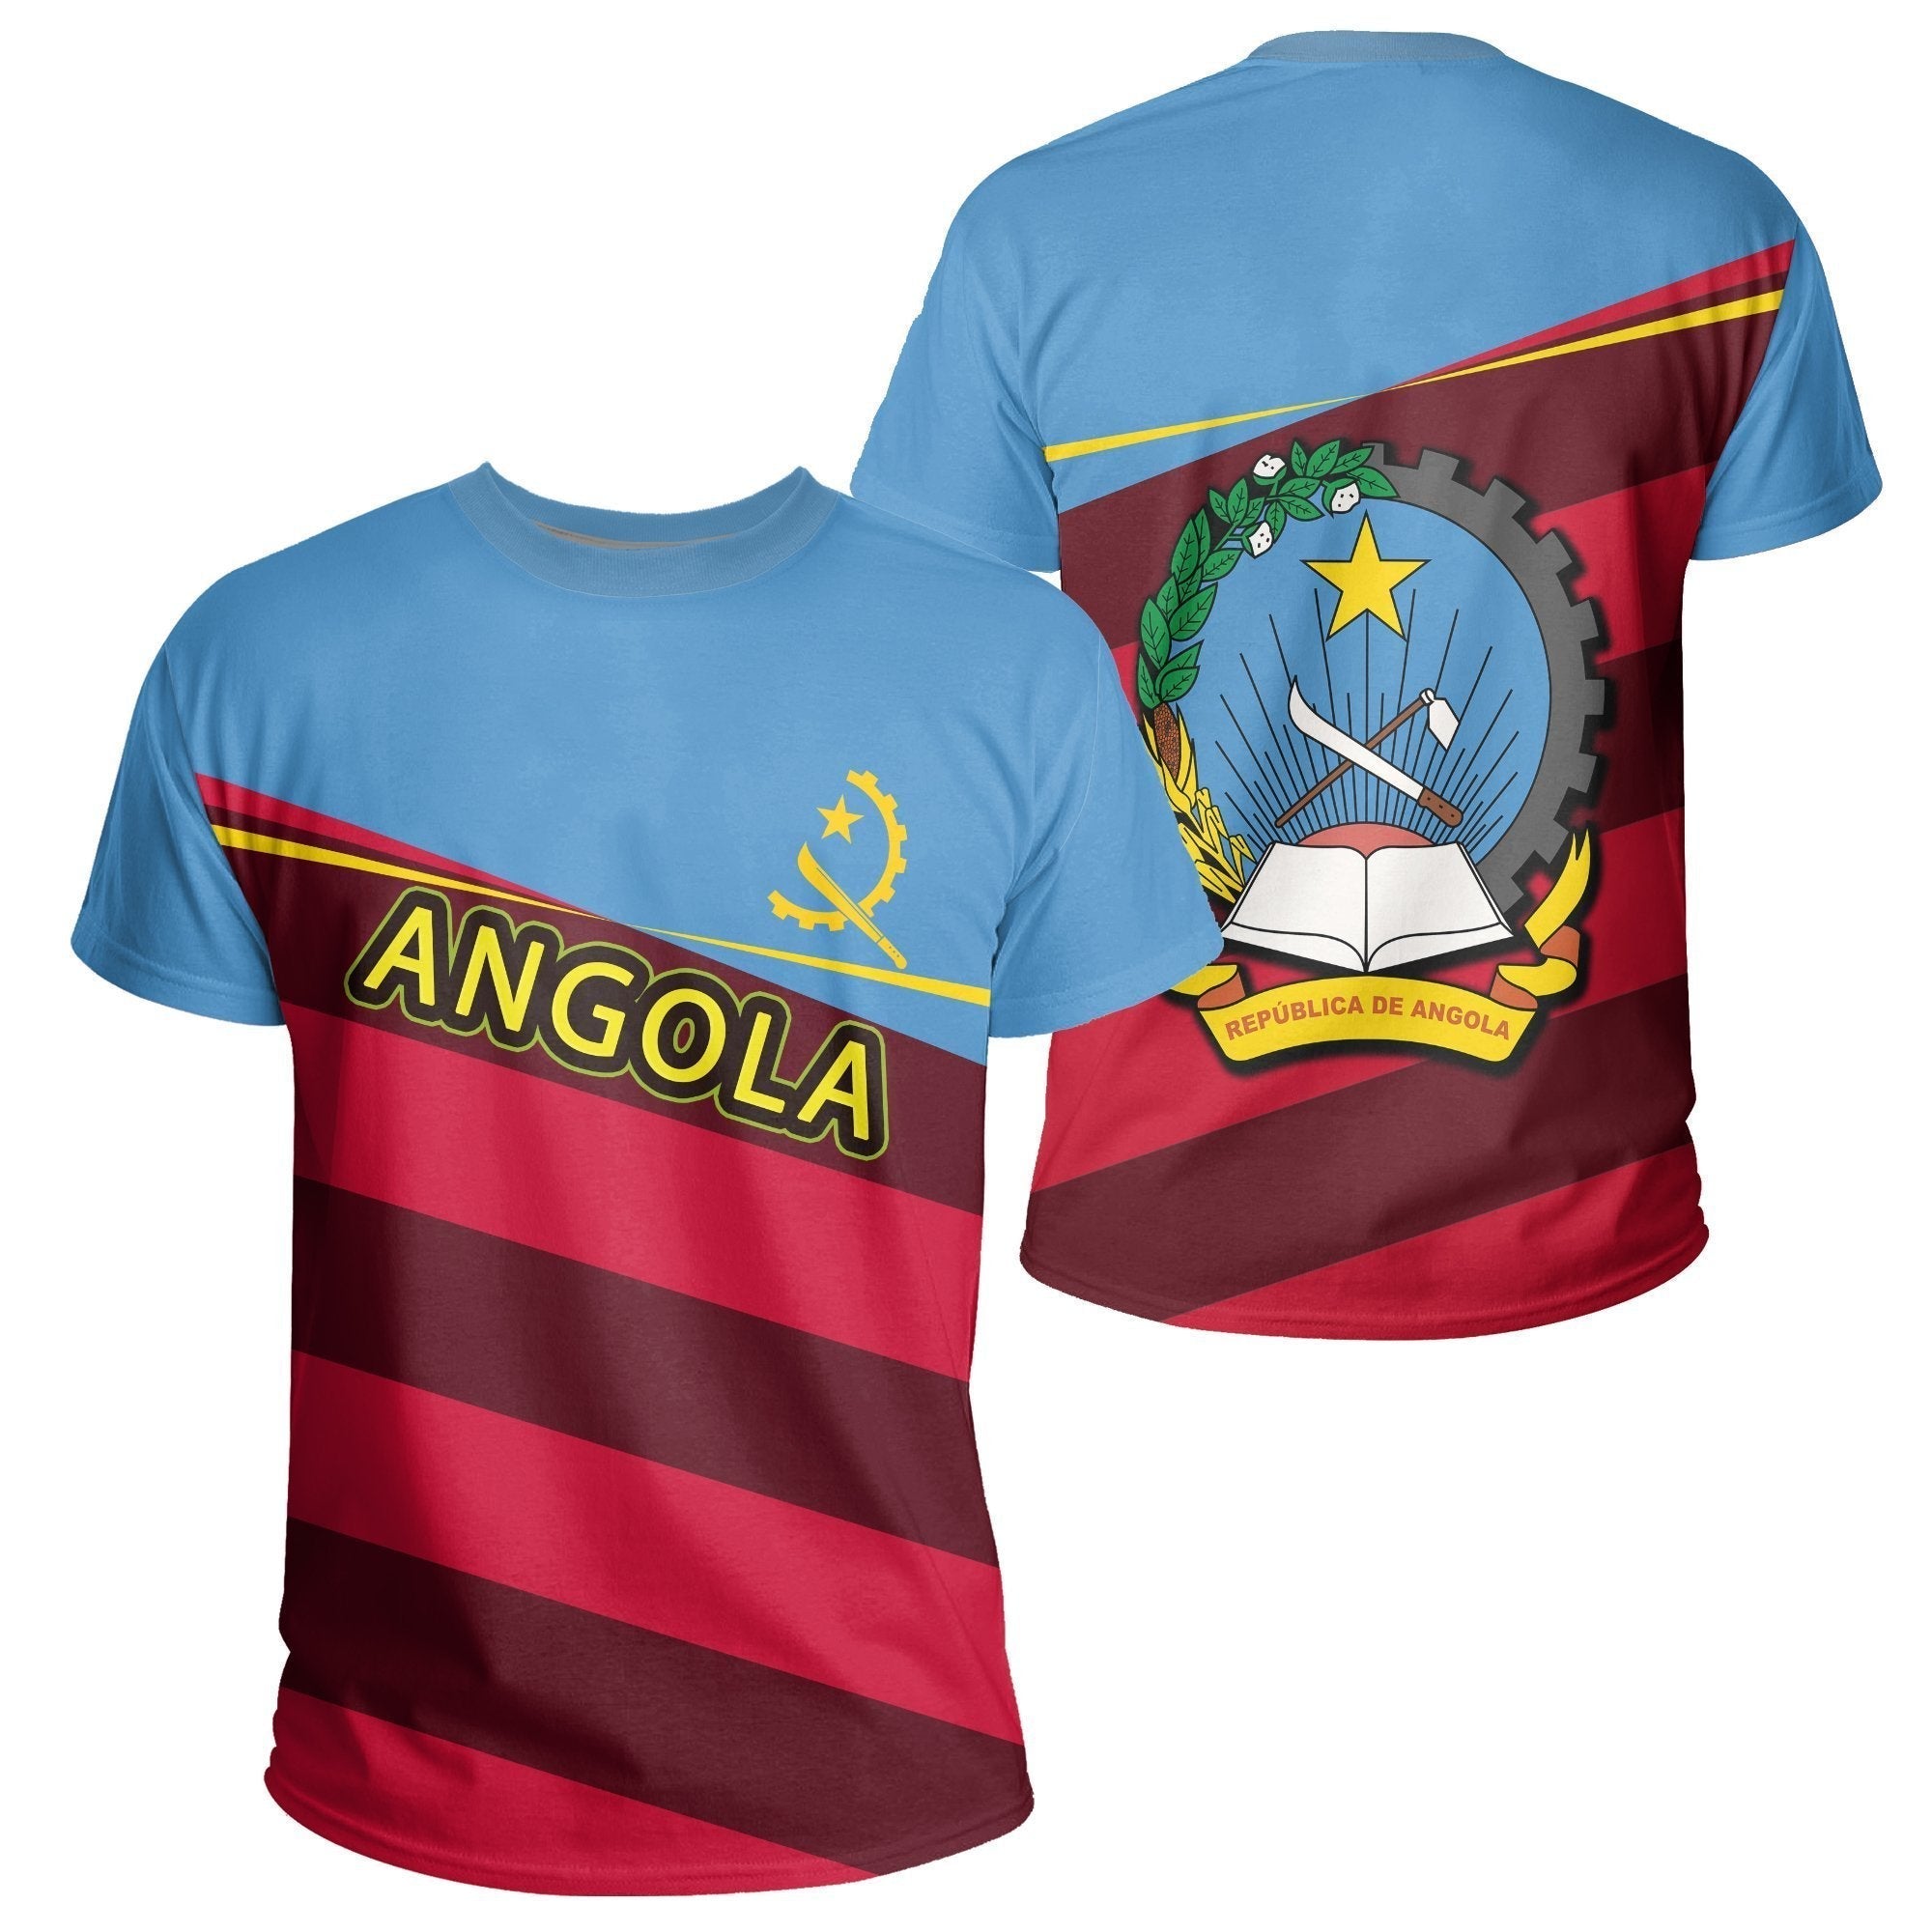 wonder-print-shop-t-shirt-angola-vivian-style-tee